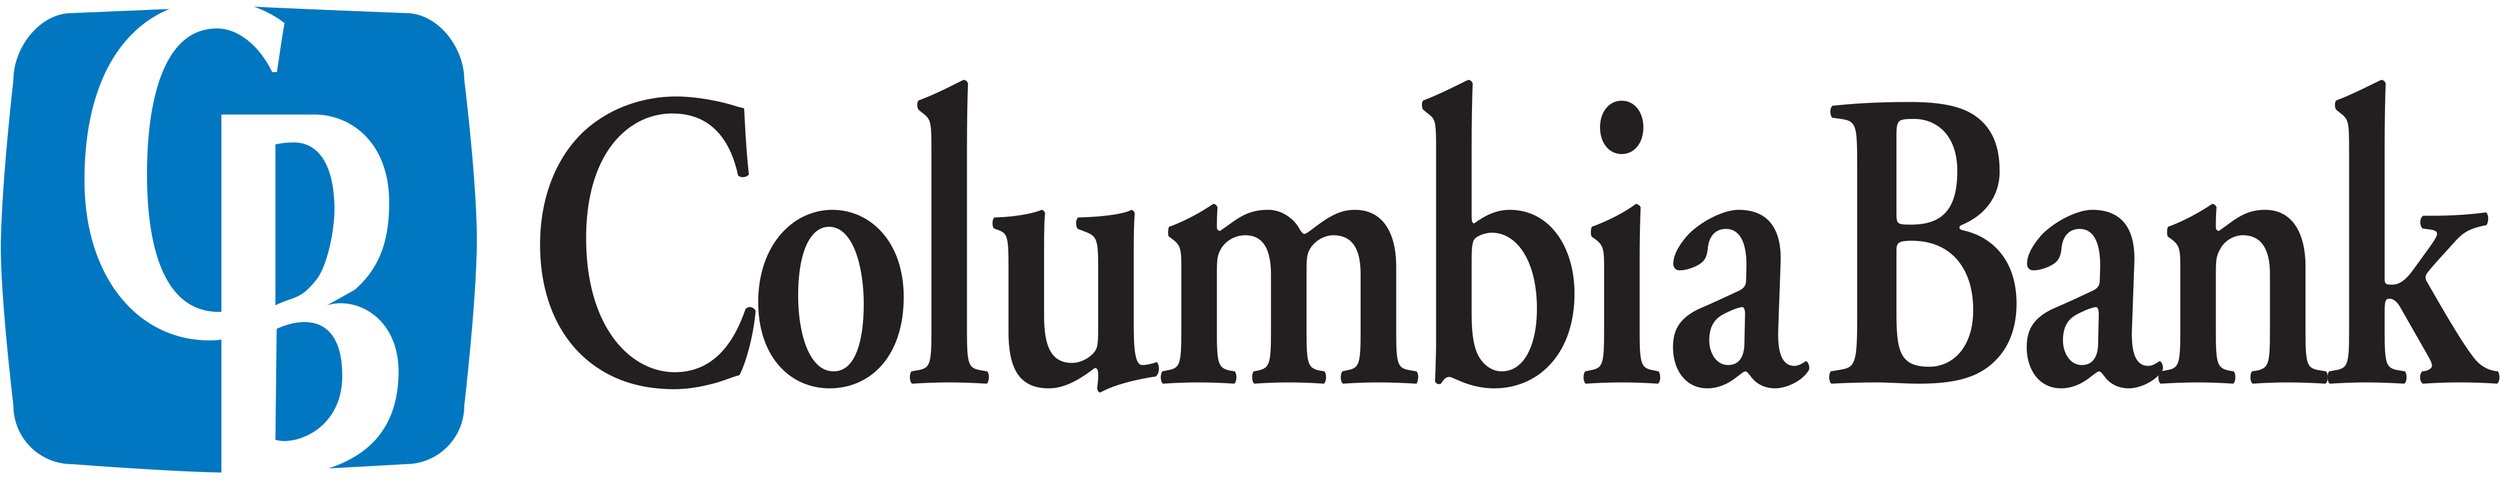 Columbia Bank Logo.jpg